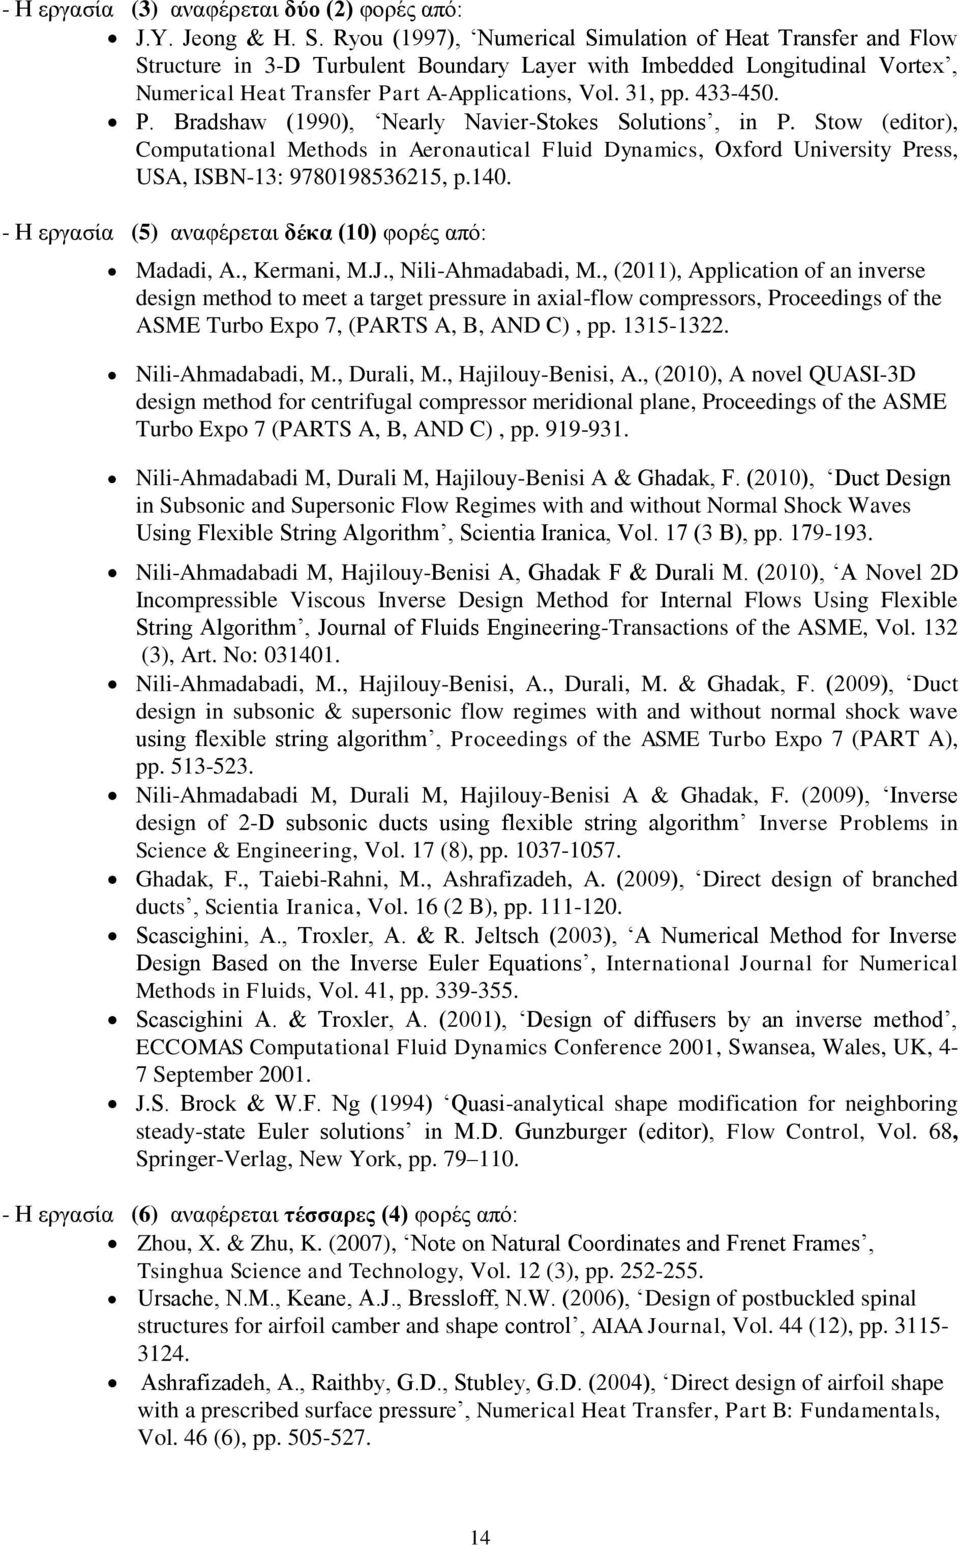 433-450. P. Bradshaw (1990), Nearly Navier-Stokes Solutions, in P. Stow (editor), Computational Methods in Aeronautical Fluid Dynamics, Oxford University Press, USA, ISBN-13: 9780198536215, p.140.